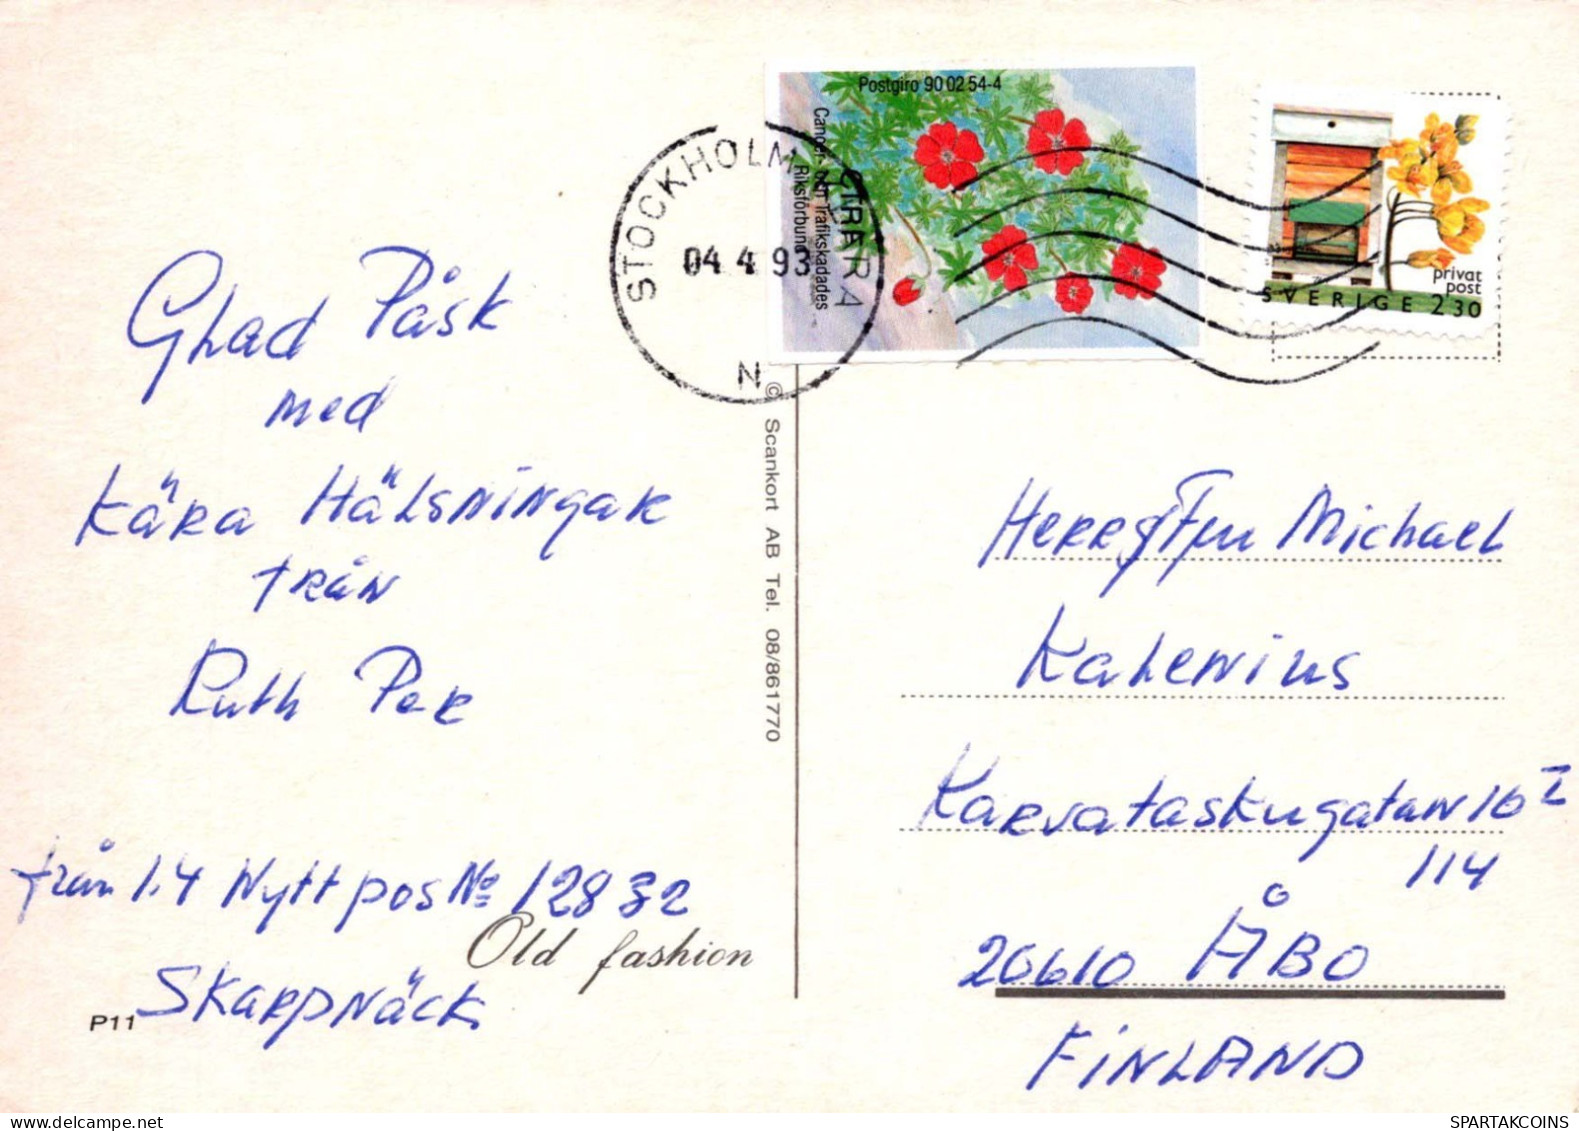 EASTER CHILDREN Vintage Postcard CPSM #PBO341.A - Ostern